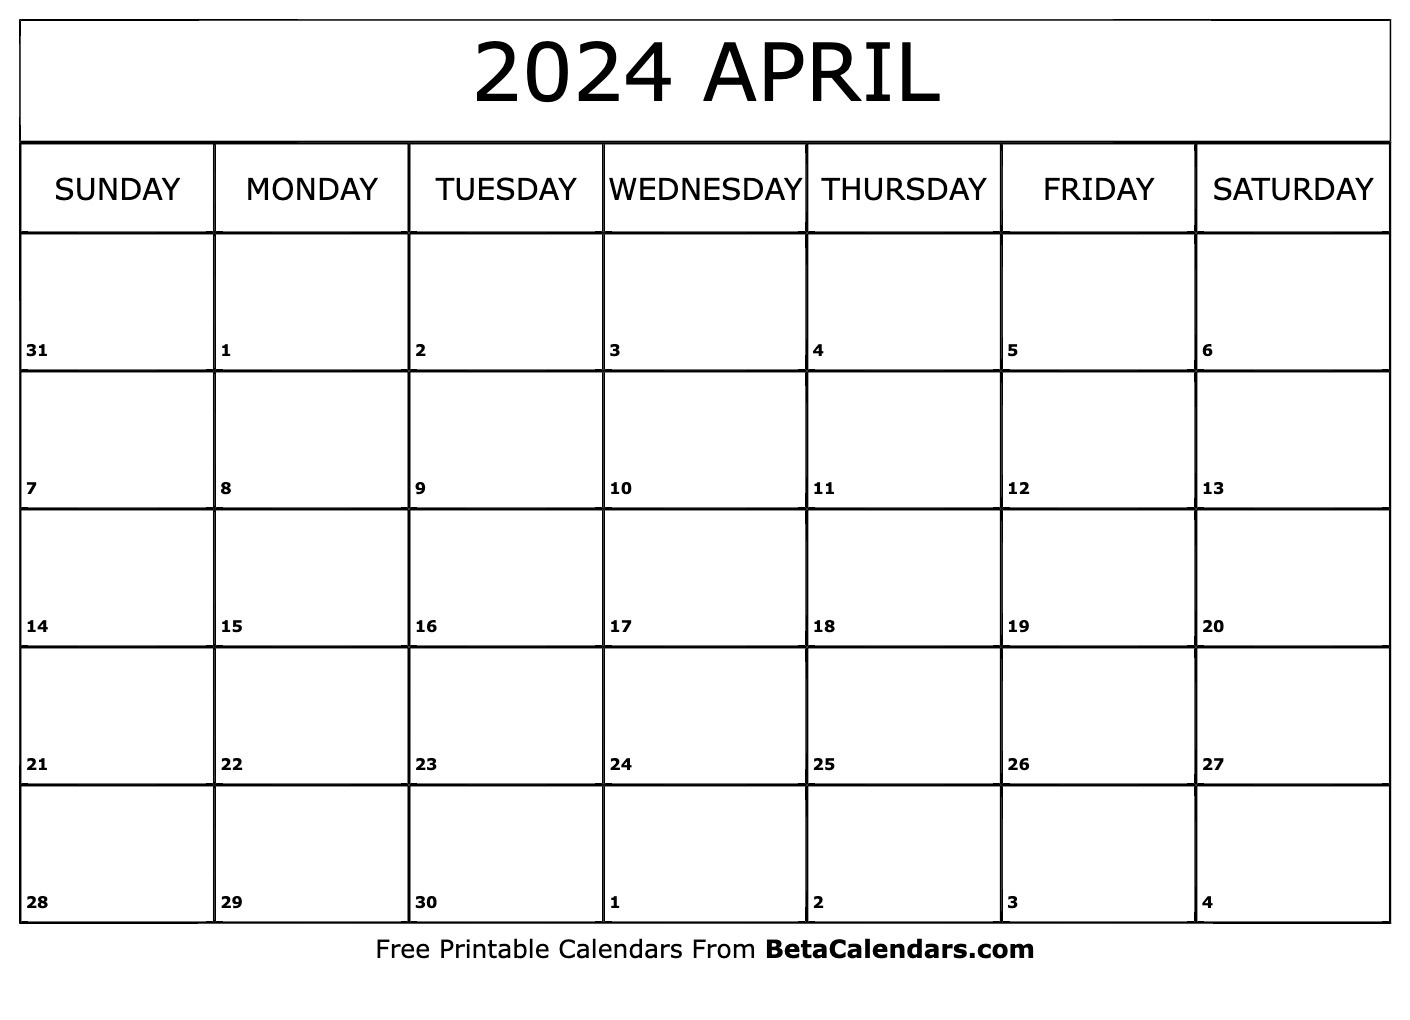 Free Printable April 2024 Calendar with Free Printable Blank April 2024 Calendar